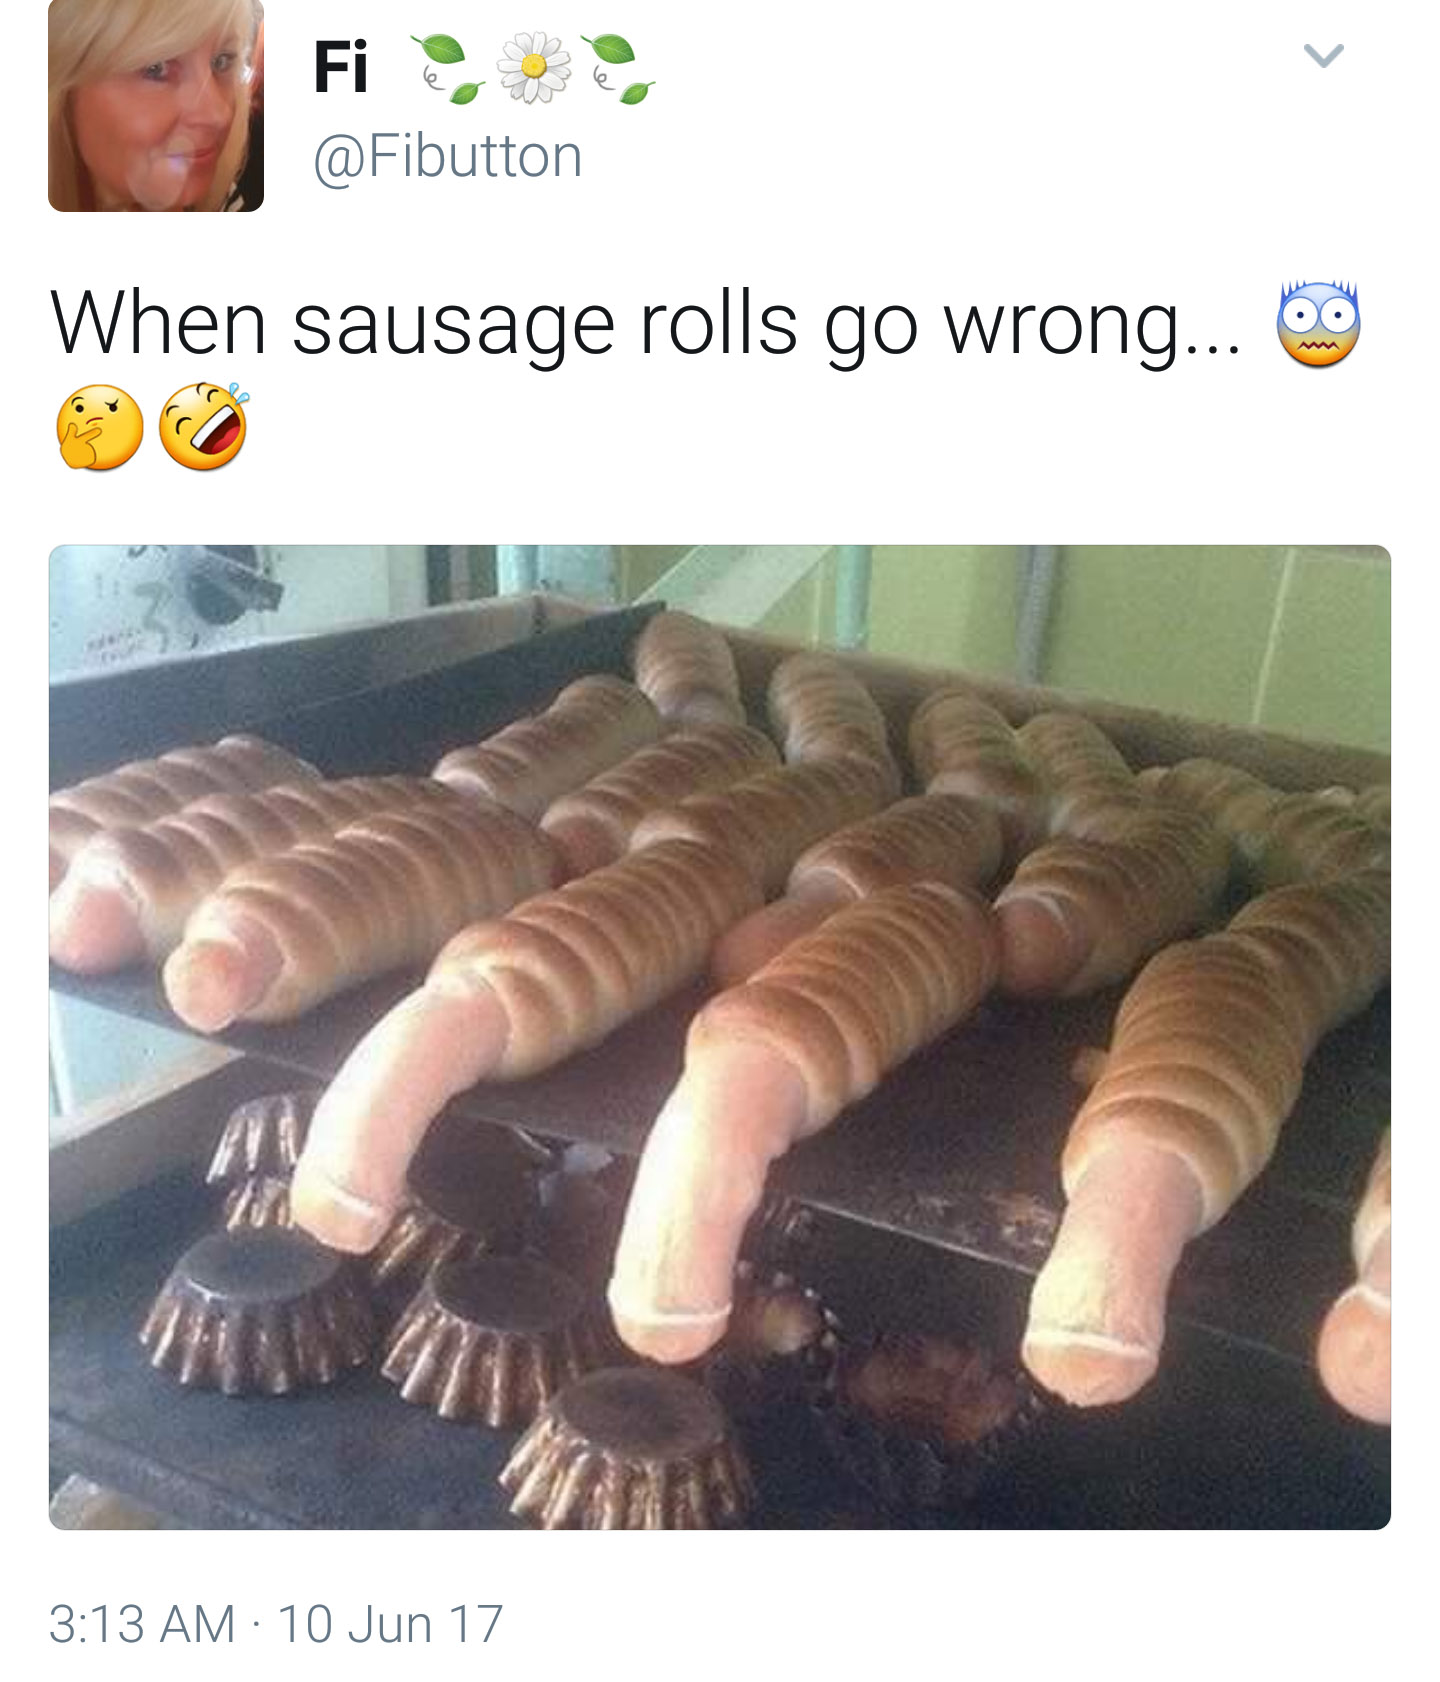 sausage rolls go wrong - When sausage rolls go wrong... 09 10 Jun 17